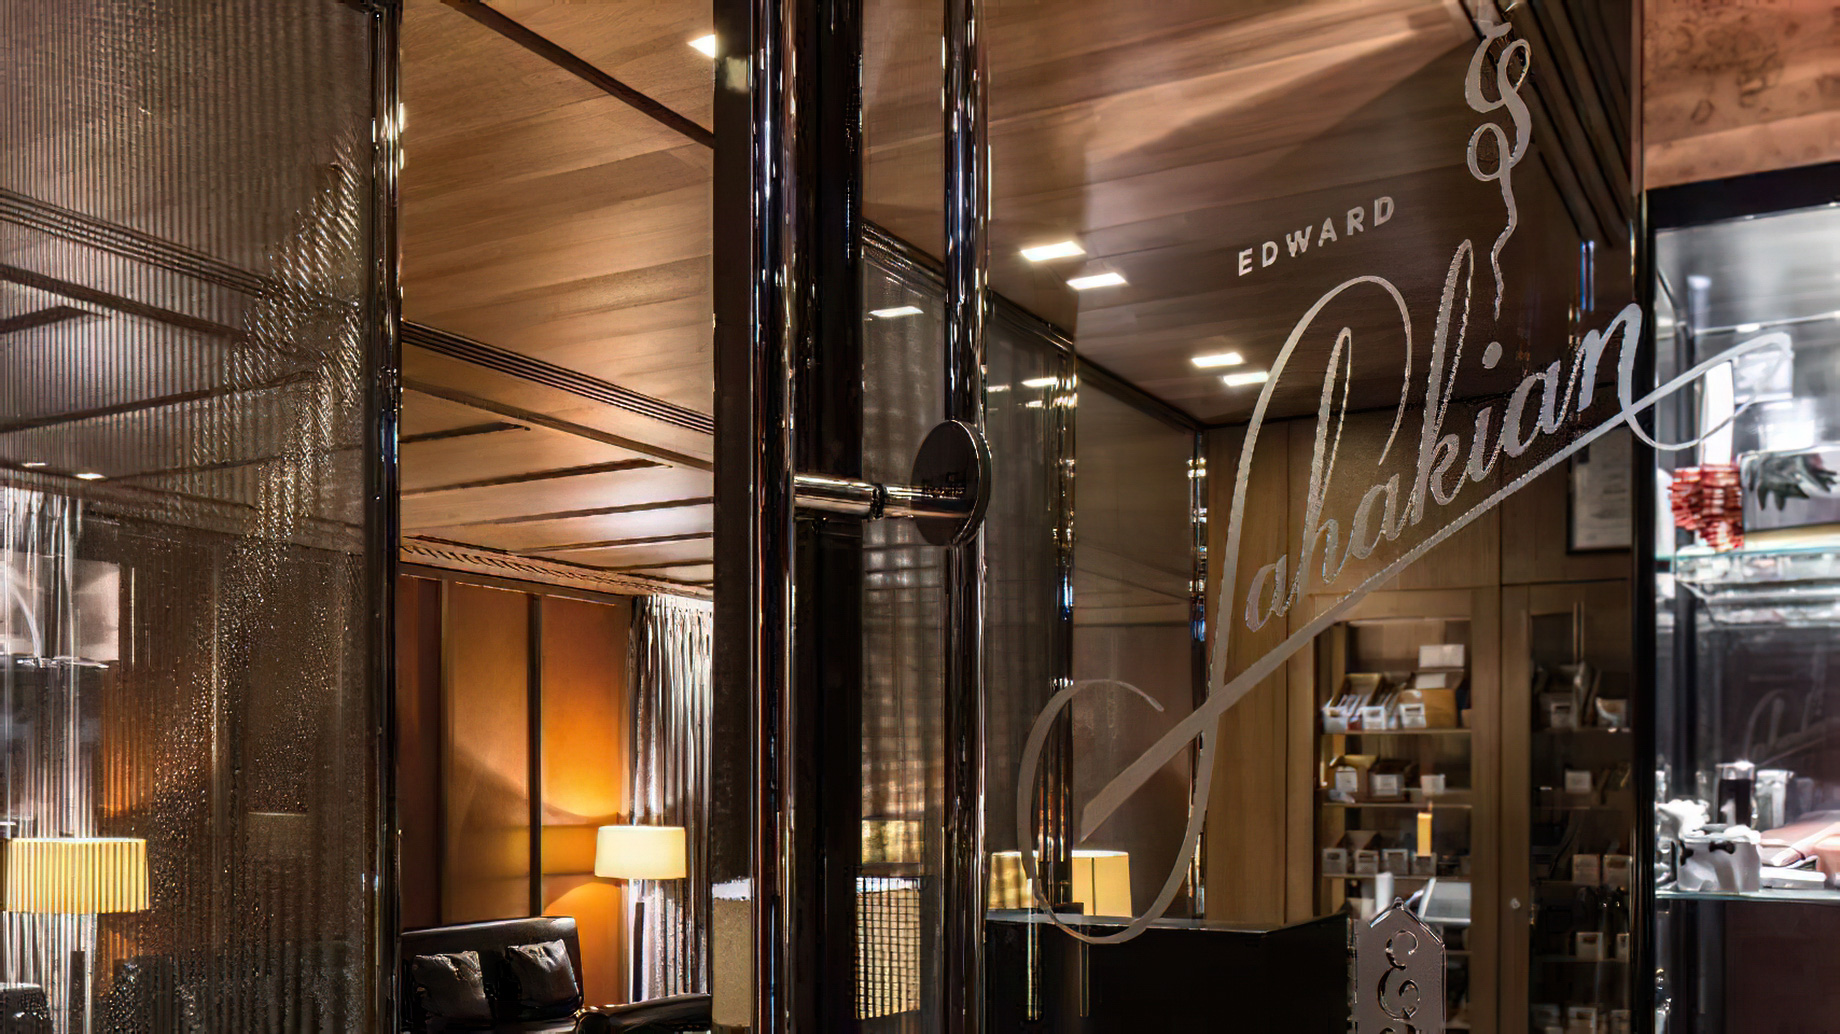 Bvlgari Hotel London – Knightsbridge, London, UK – Edward Sahakian Cigar Shop